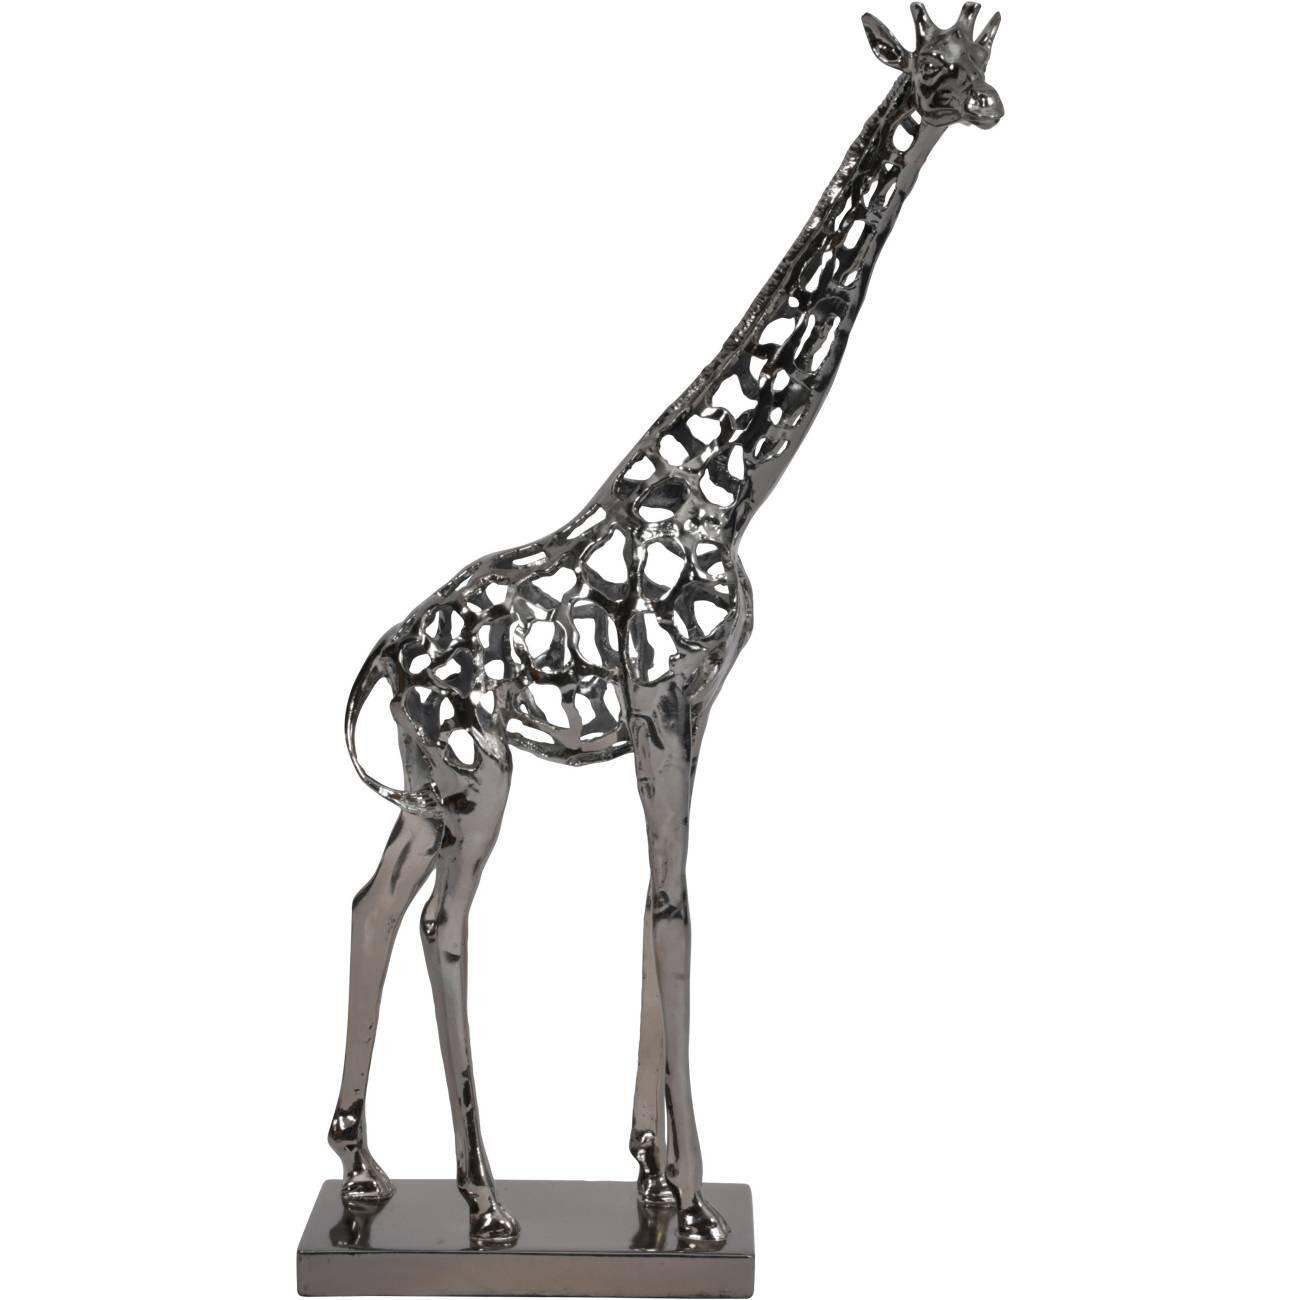 Black Nickel Hollow Giraffe 70cm Sculpture - image 1